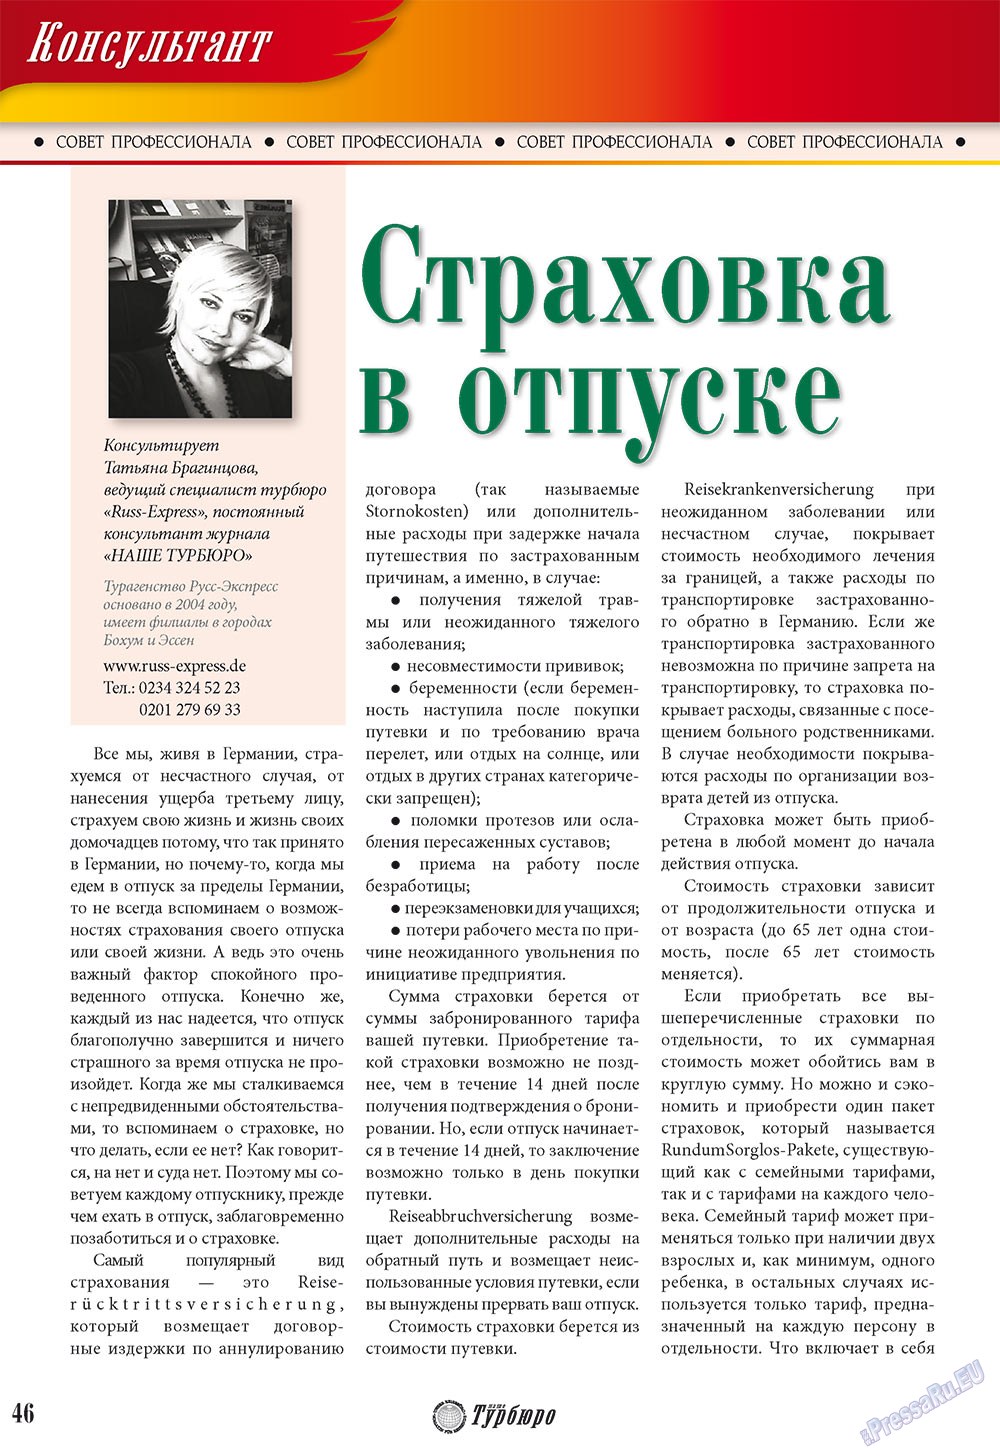 Наше Турбюро (журнал). 2010 год, номер 2, стр. 46